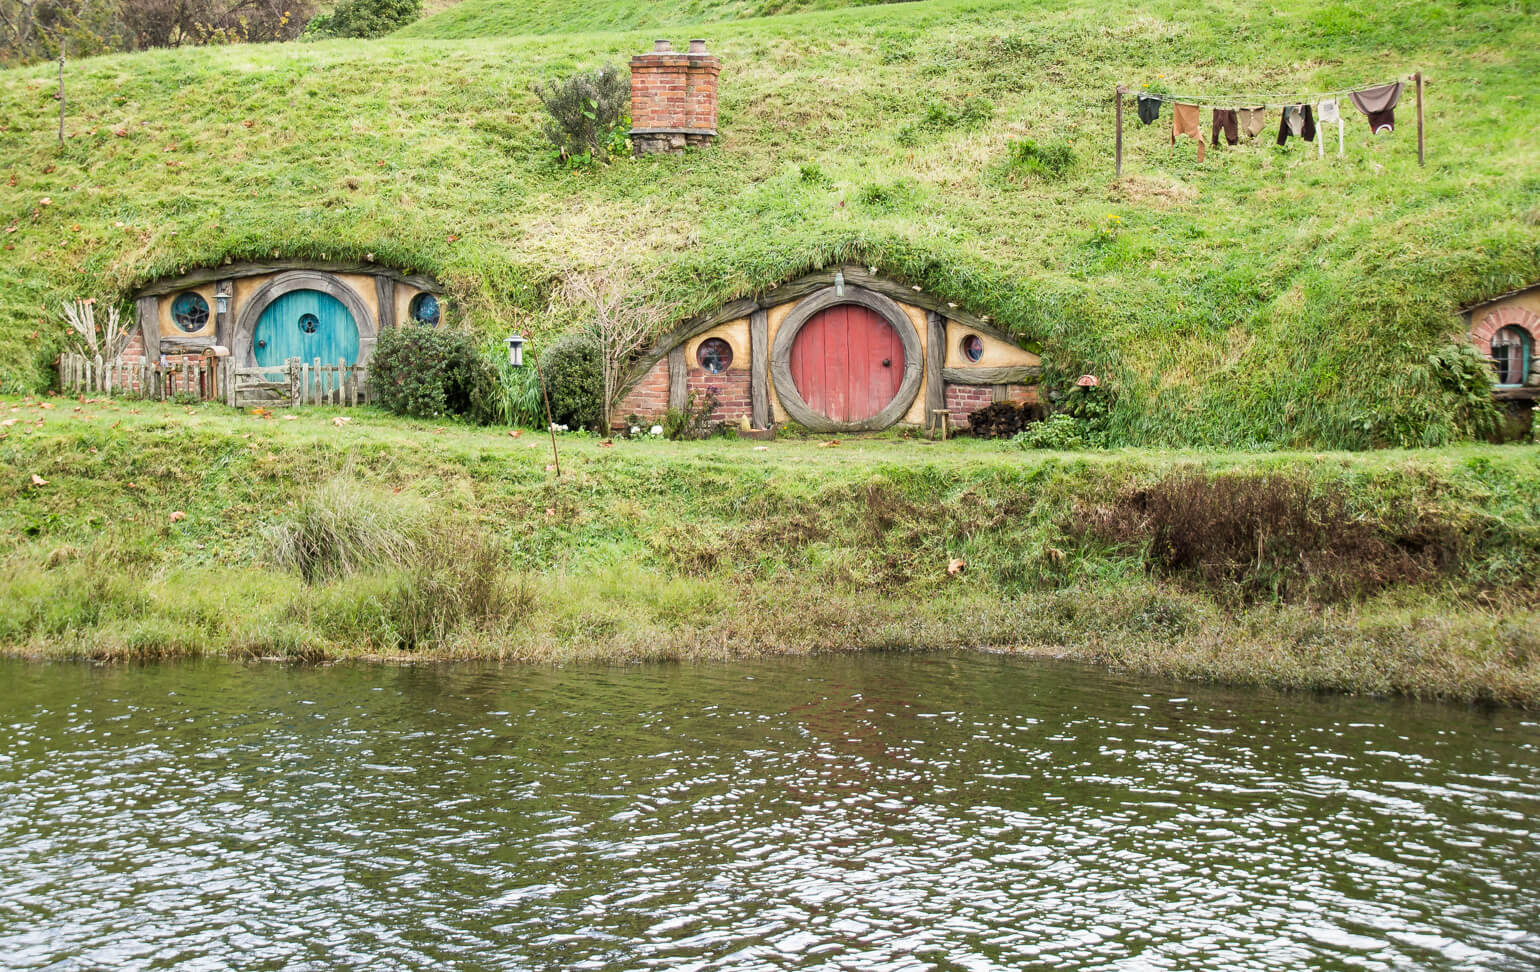 Hobbit holes in Hobbiton